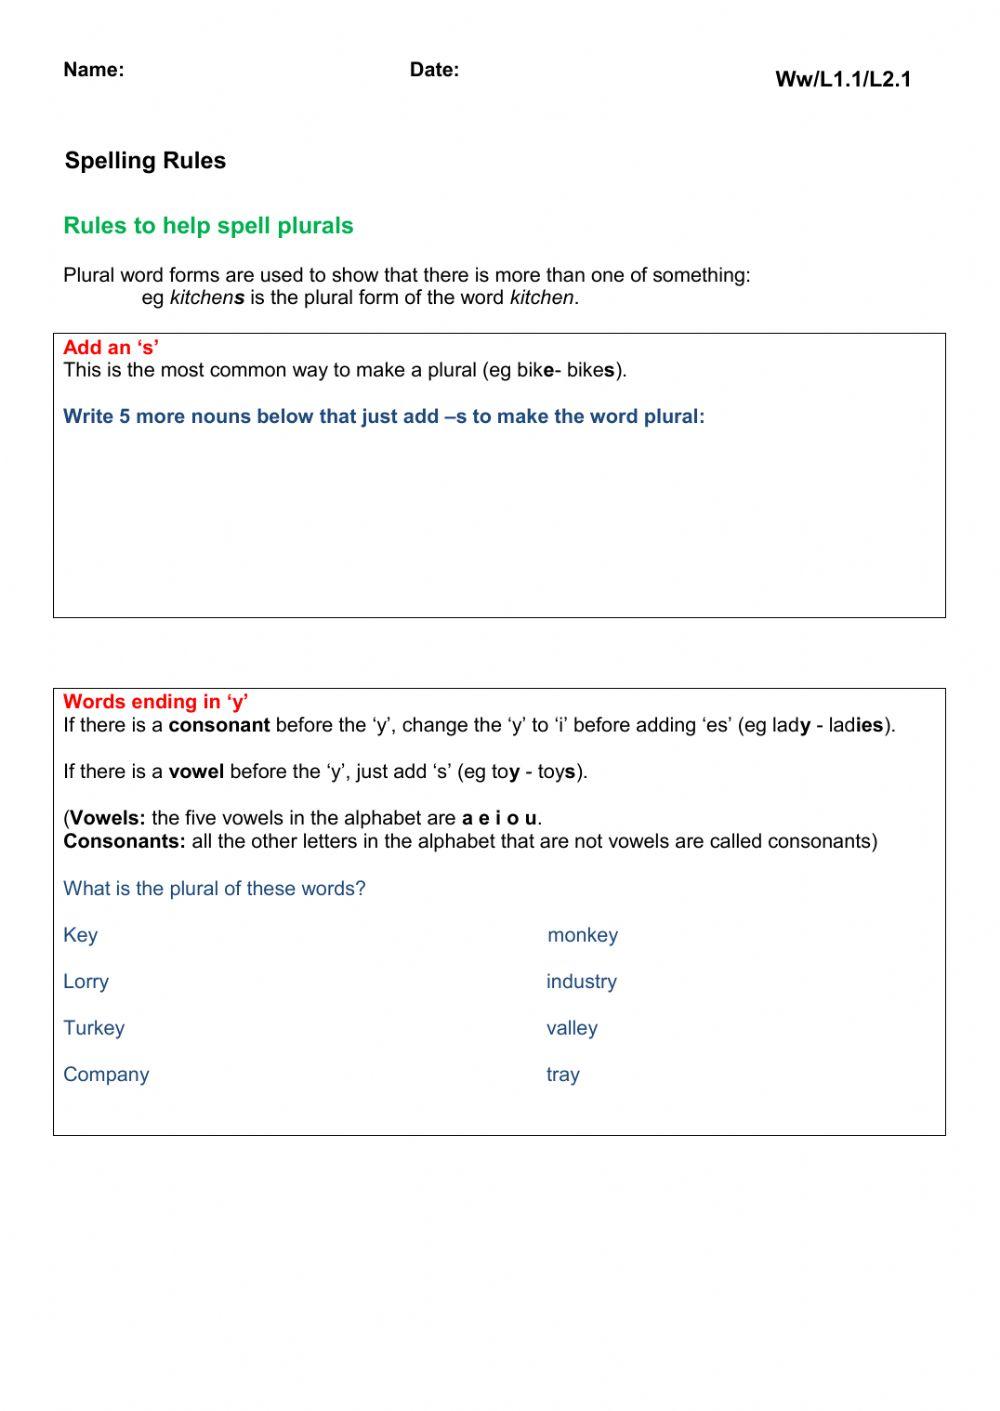 Plural Spelling Rules